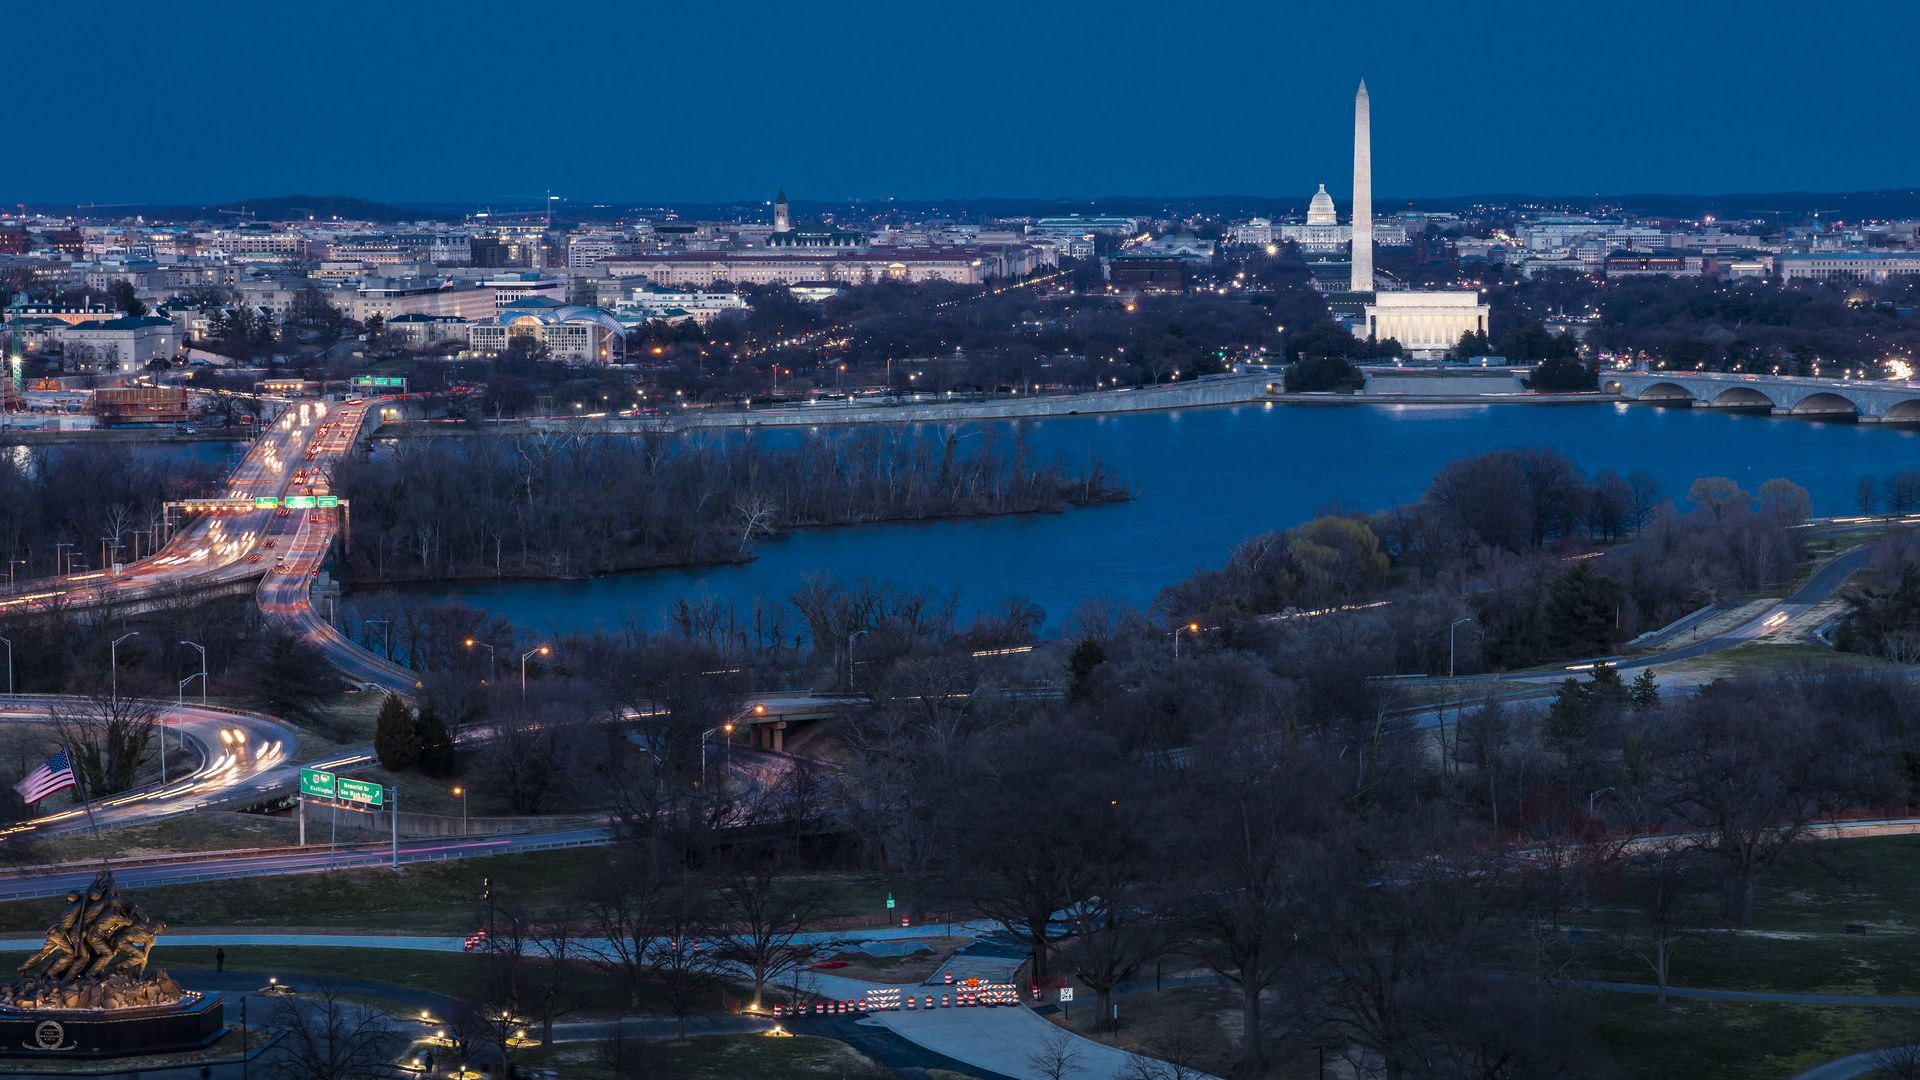 A view of Washington, D.C. at night.